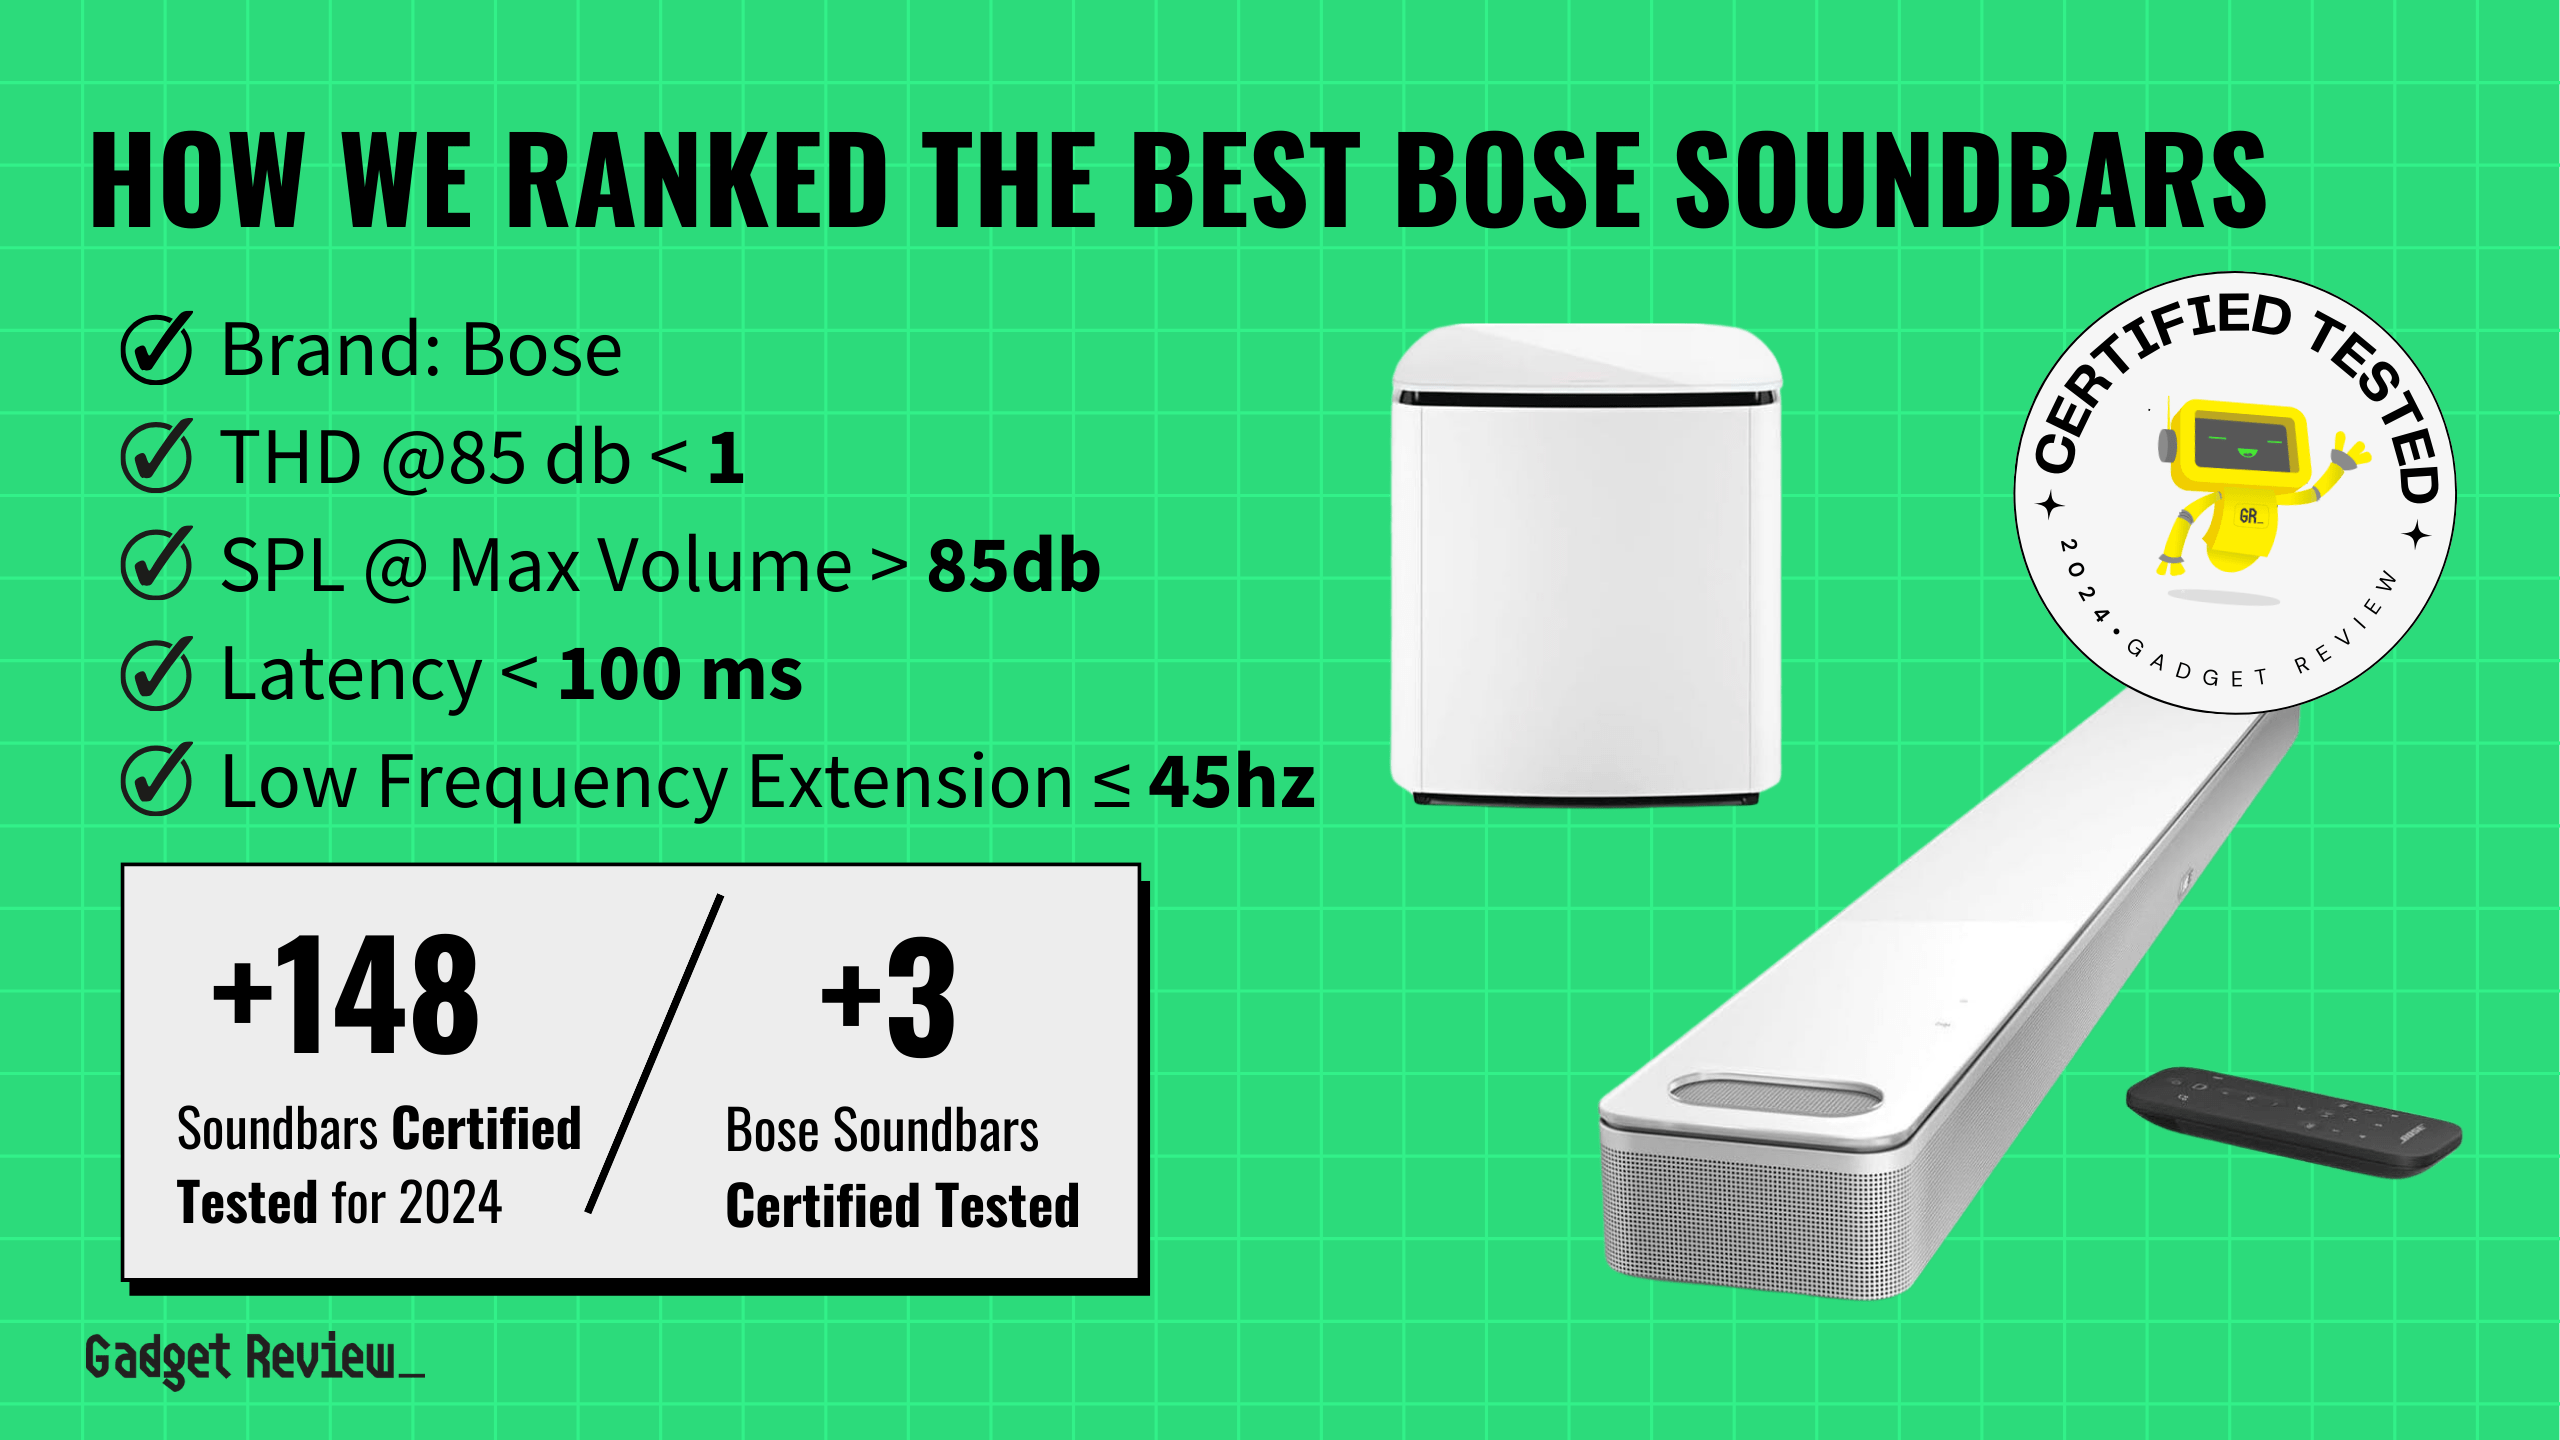 best bose soundbar guide that shows the top best soundbar model